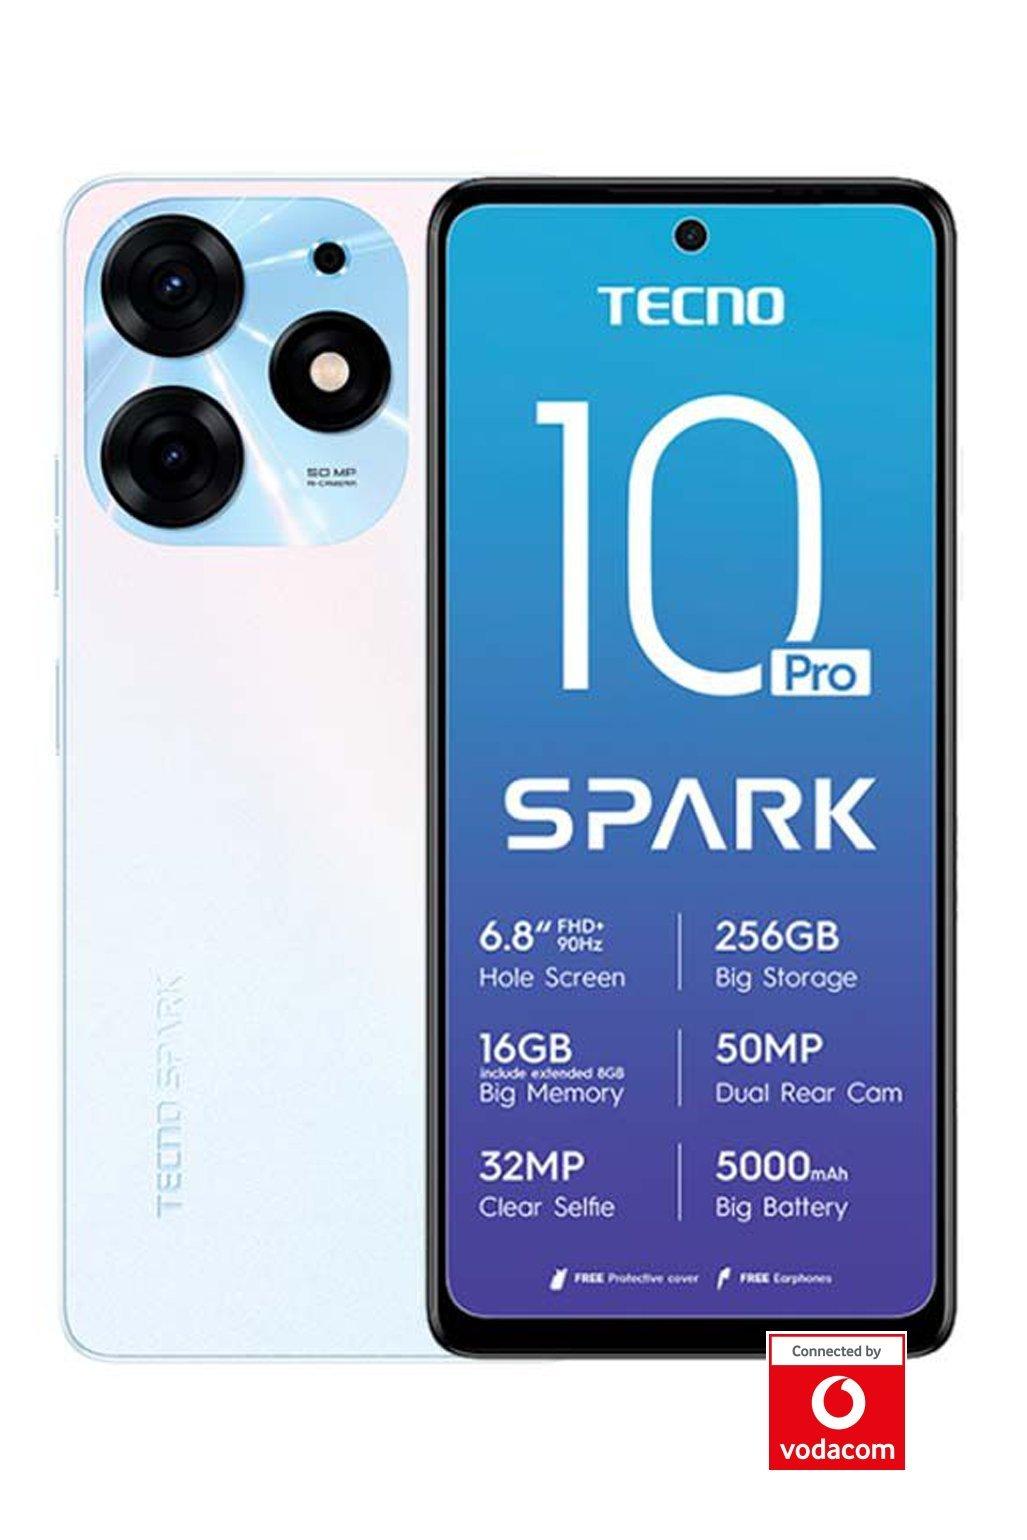 TECNO SPARK 10 Pro (CO) - TECNO Smartphones